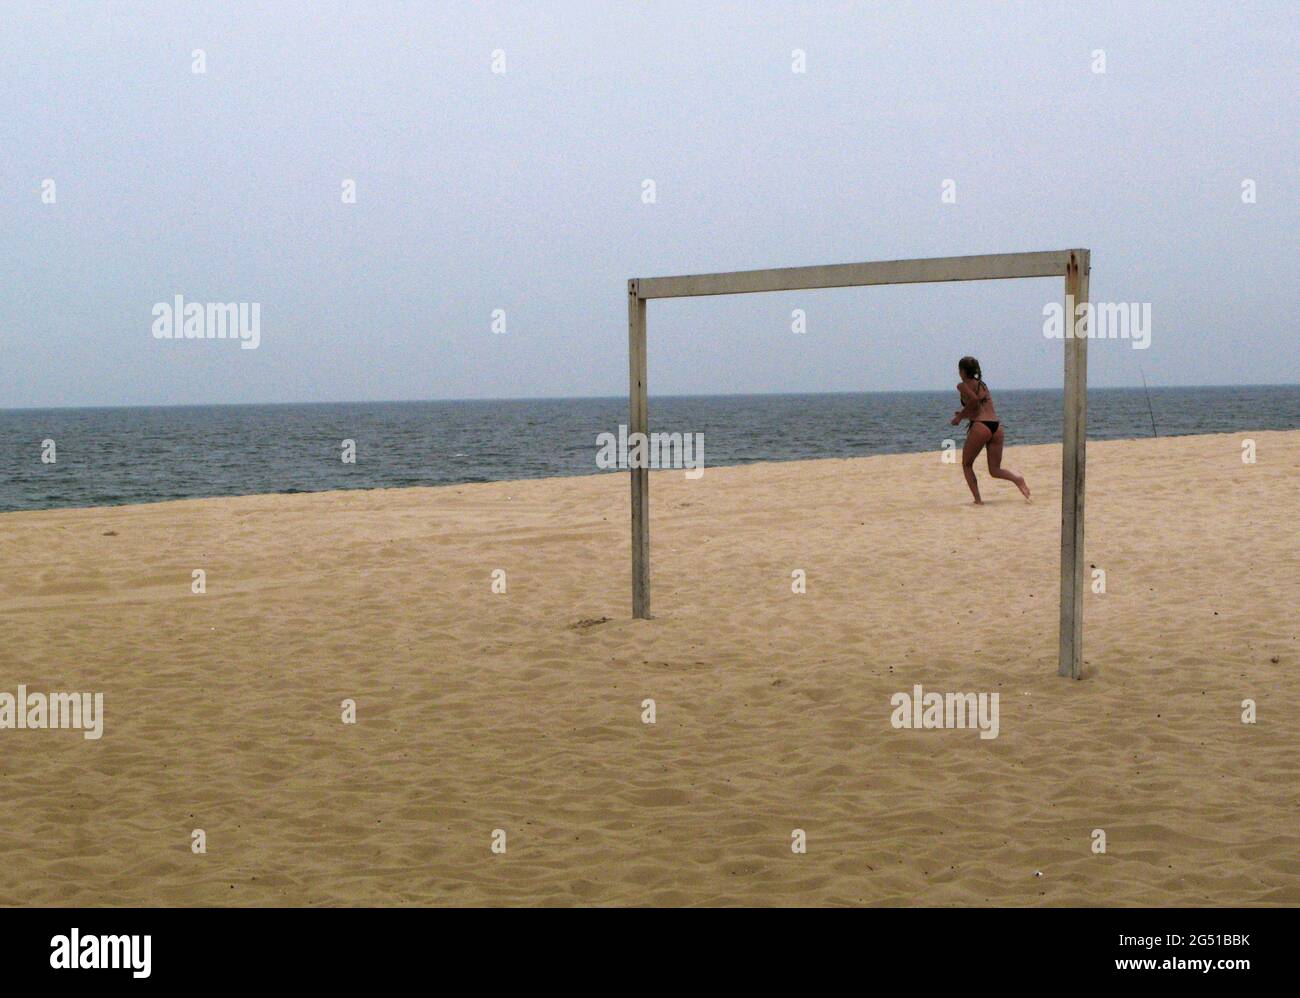 A woman running towards the water, framed by a football goal, at the beach in Leblon. Rio de Janeiro, Brazil. Stock Photo